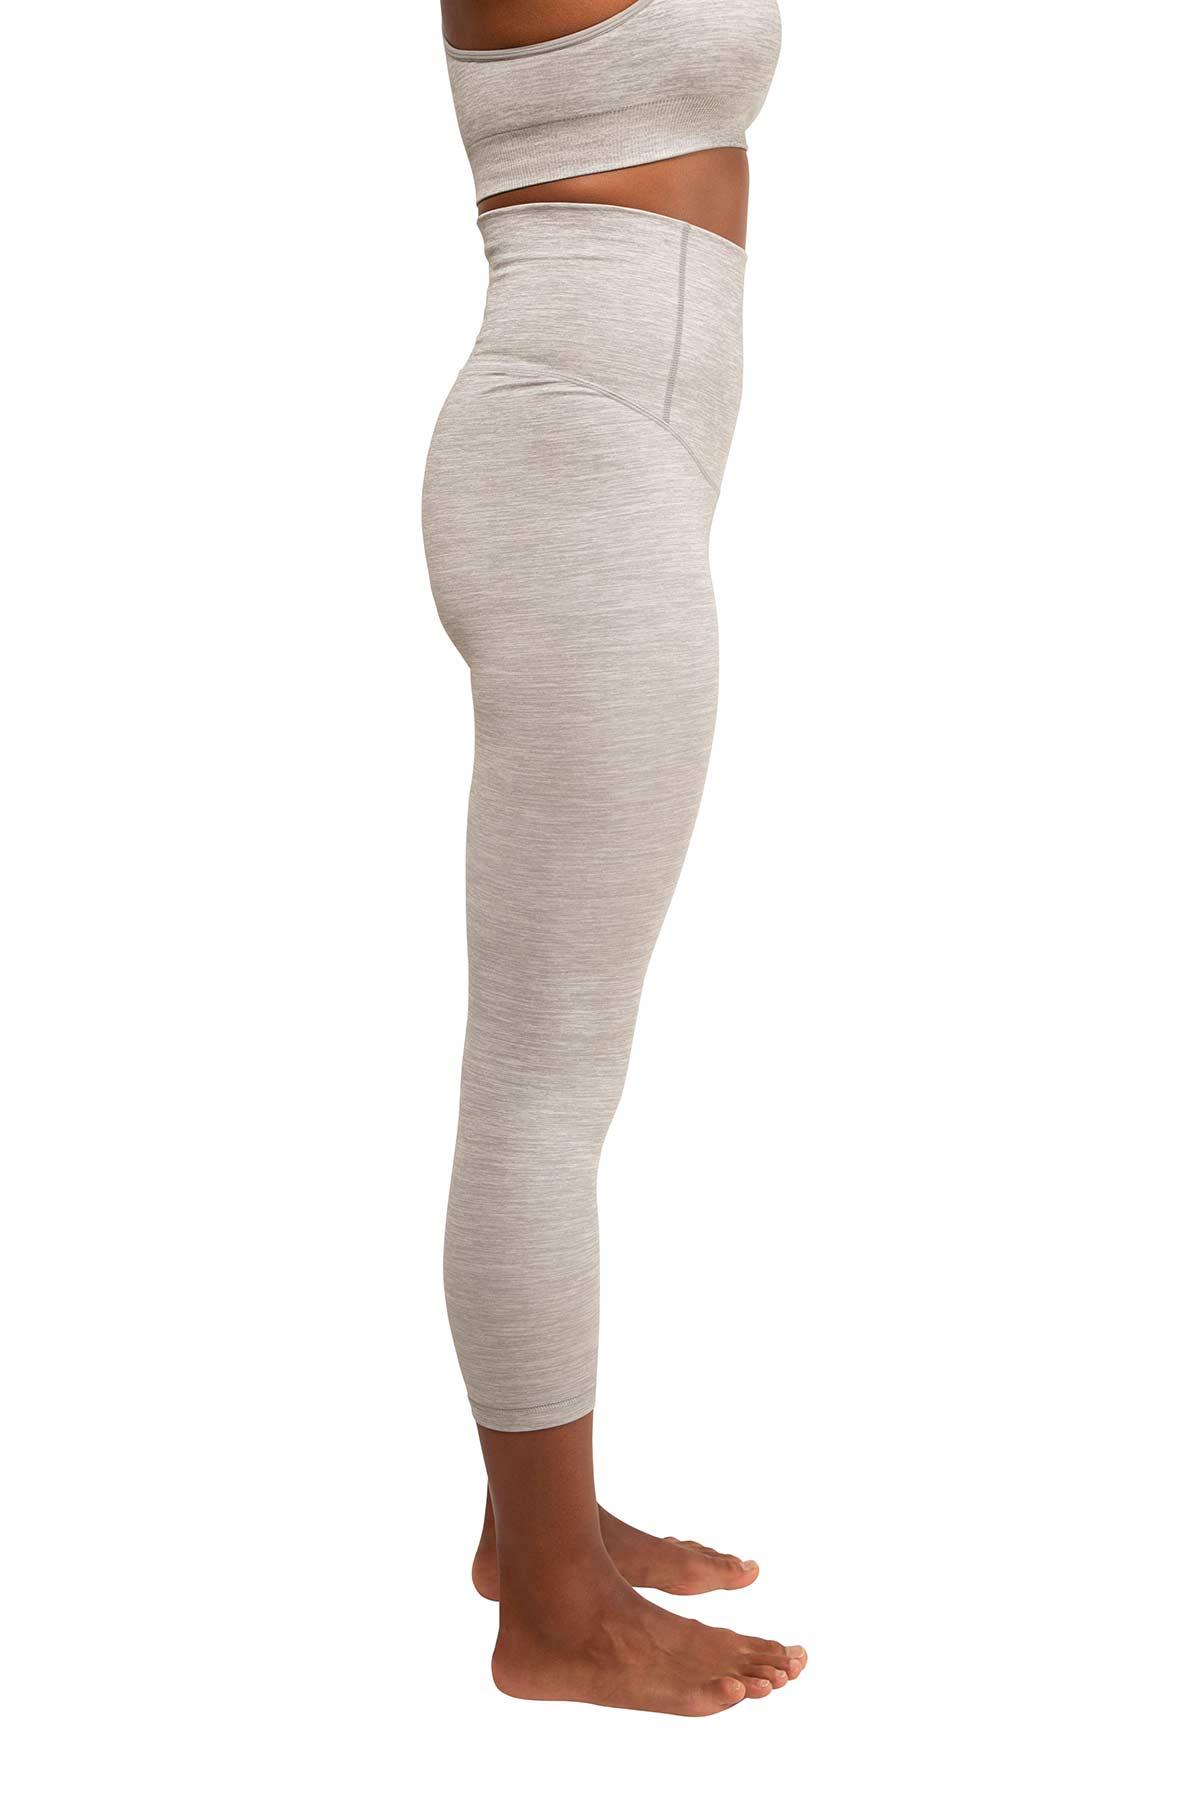 Stylish Zara Plaid Leggings - Size Medium